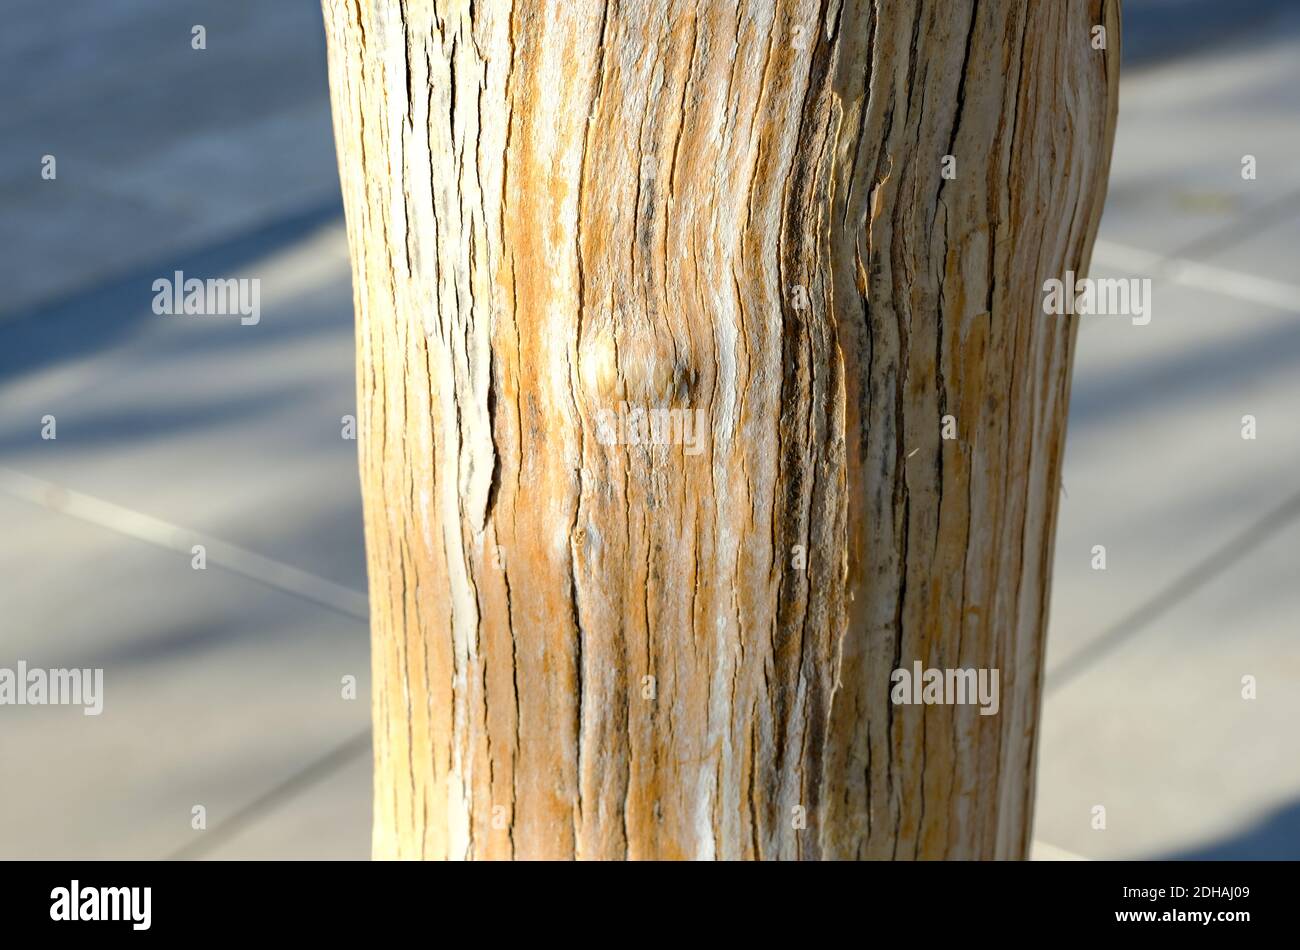 Delonix regia or Flame Tree. Wood texture, tree bark. Stock Photo